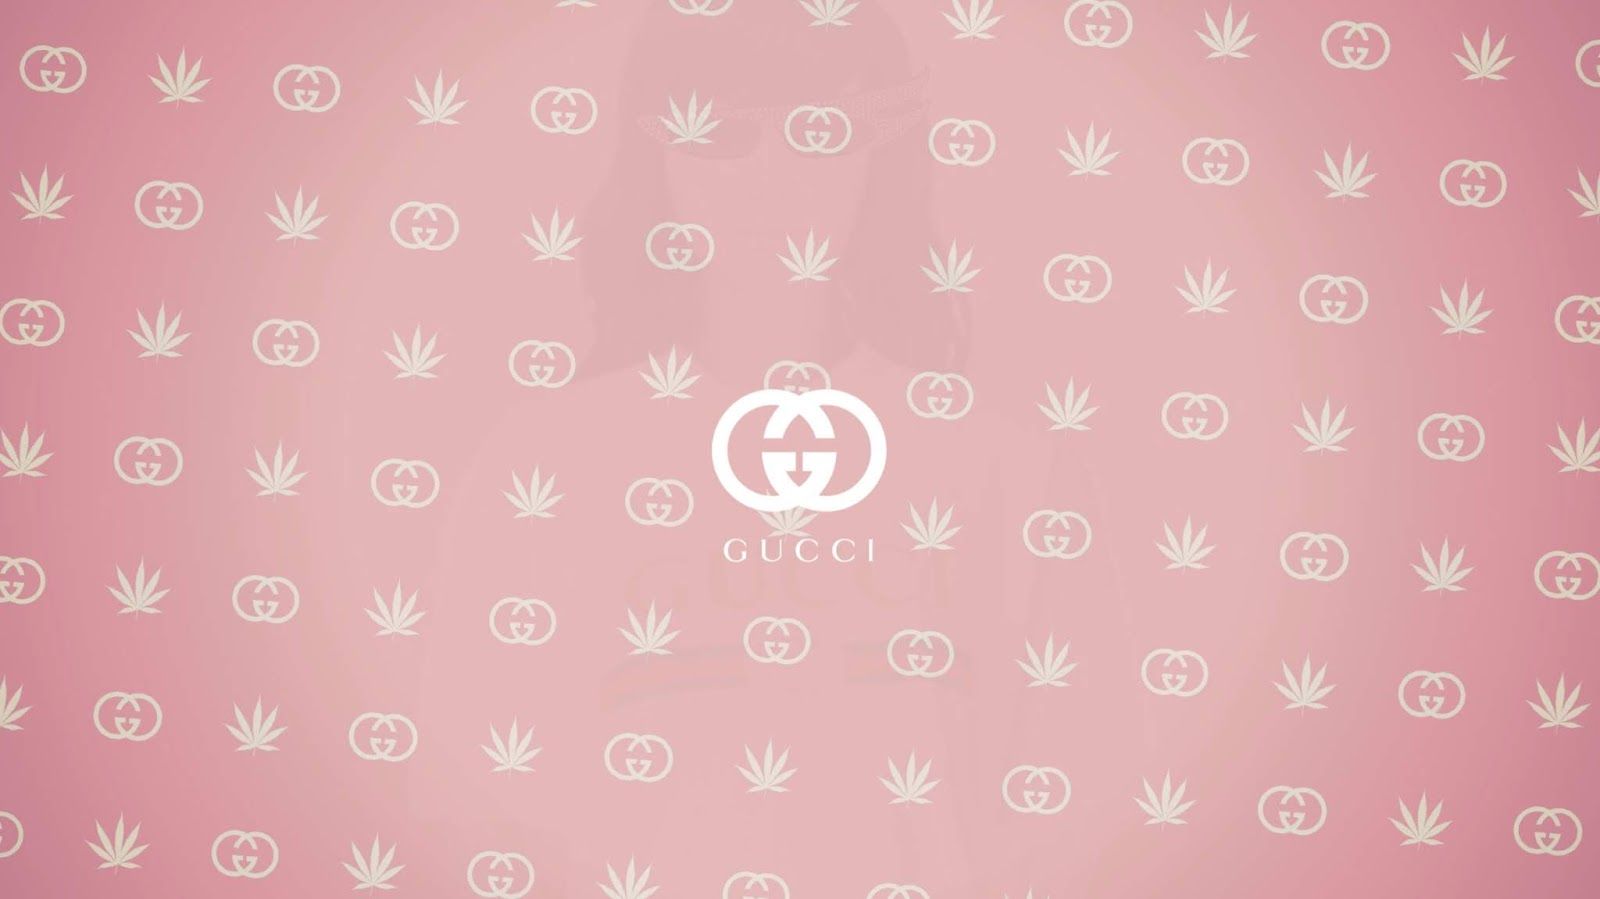 Gucci wallpaper by FckFace214  Download on ZEDGE  10fd